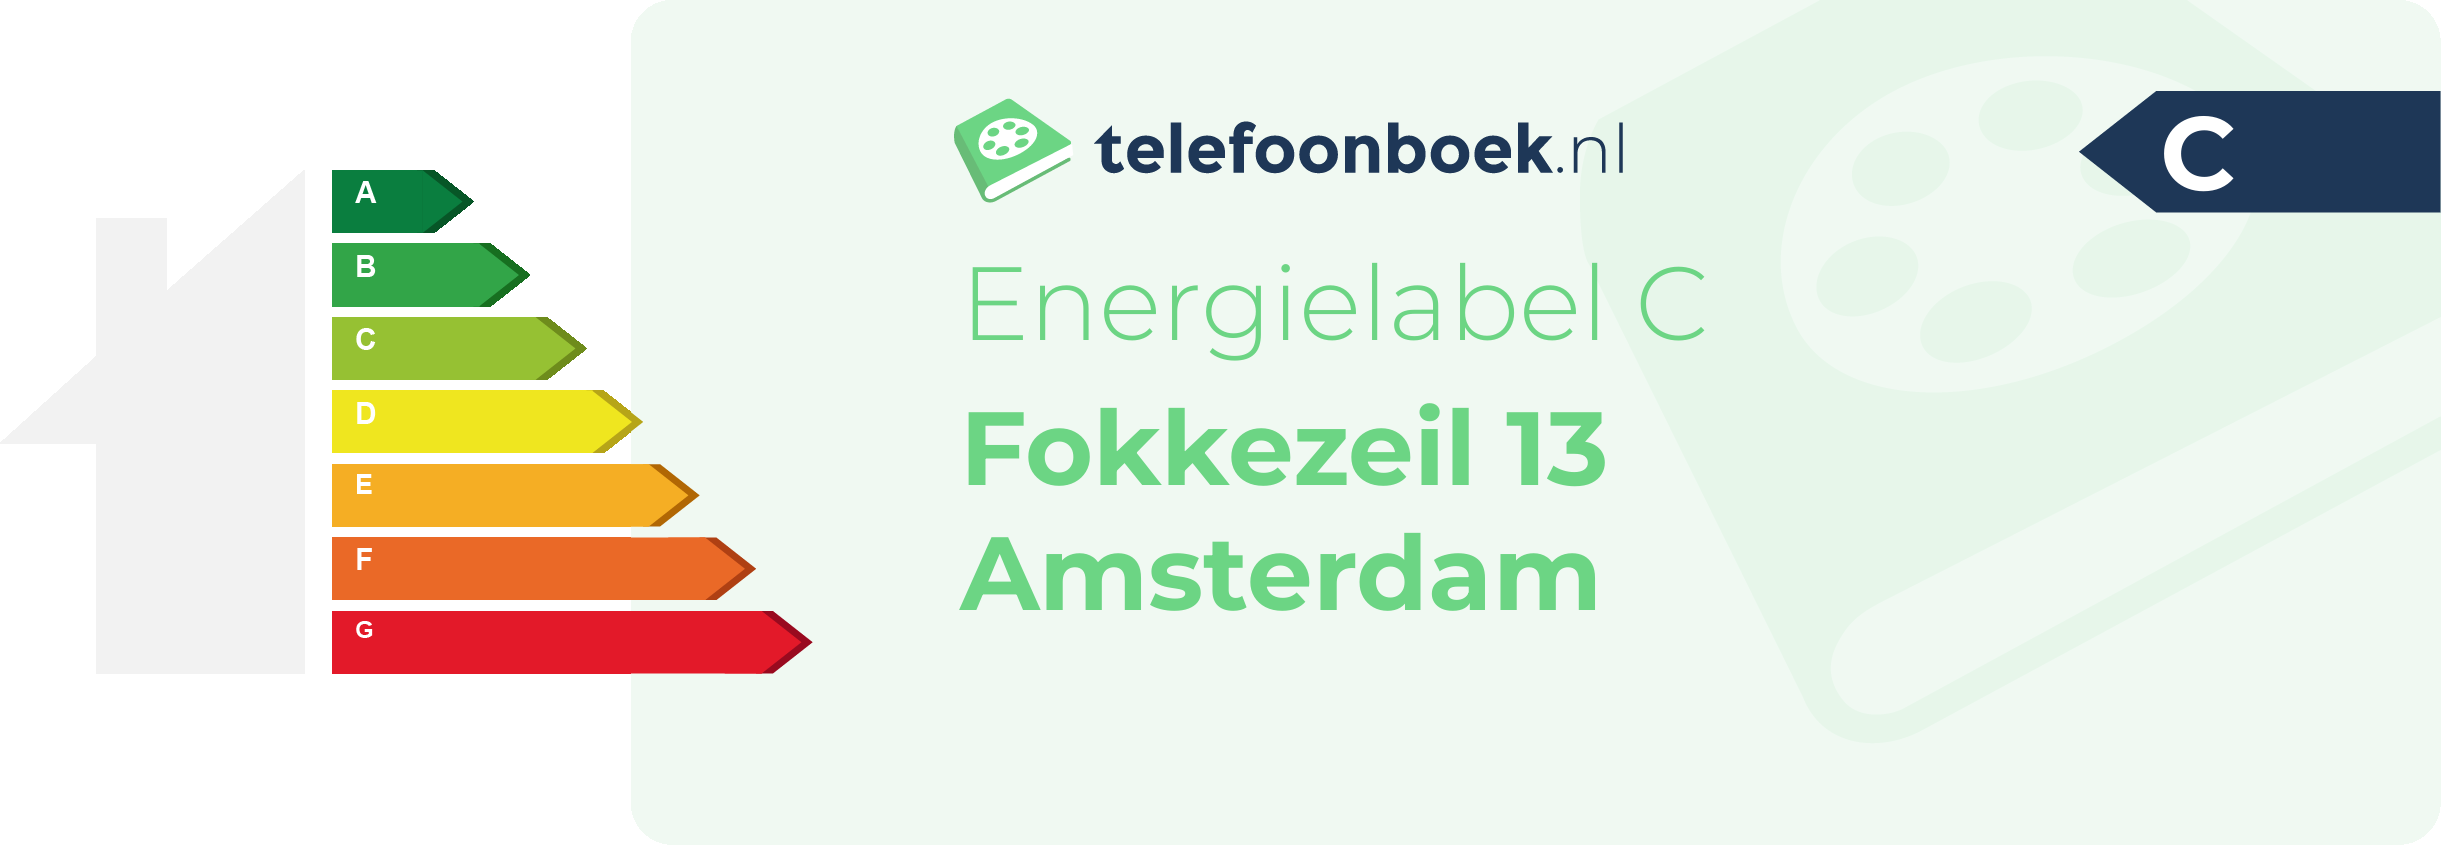 Energielabel Fokkezeil 13 Amsterdam